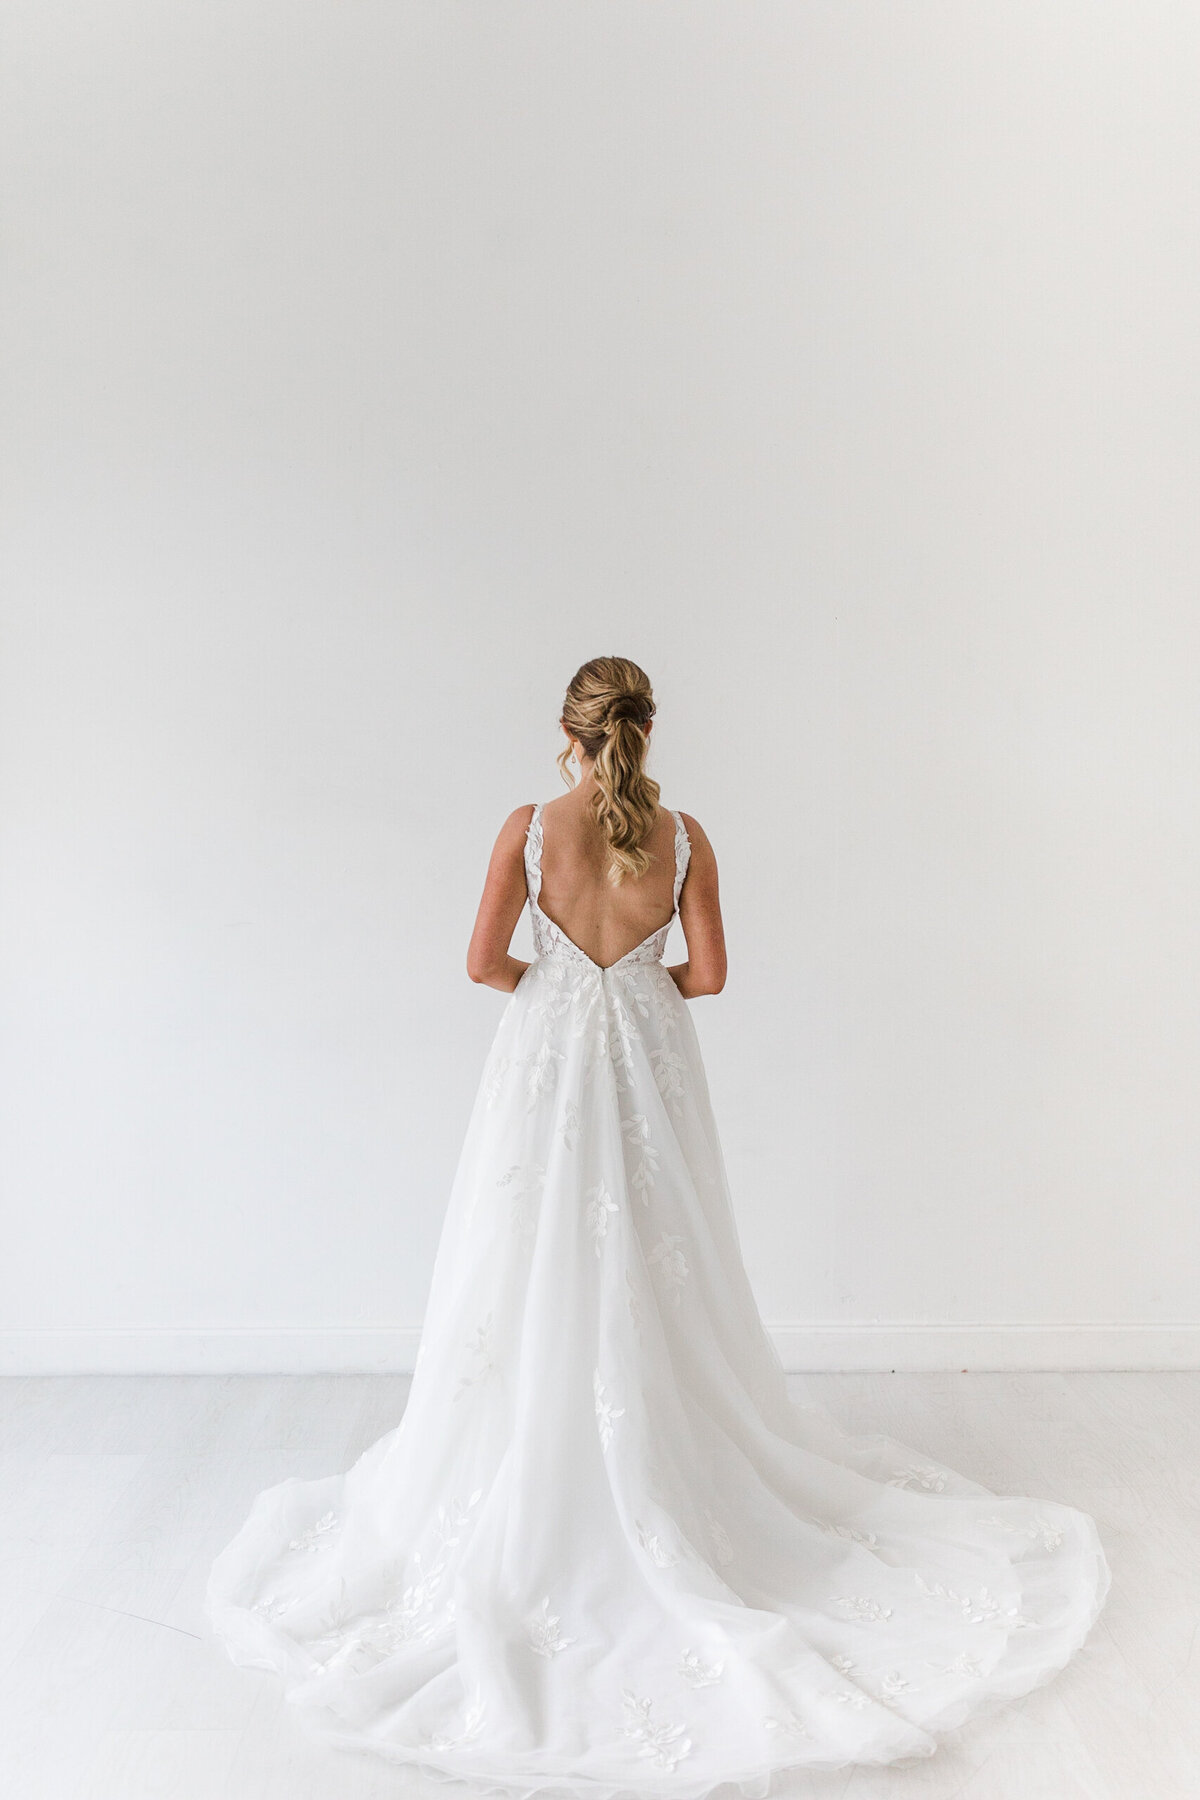 Marissa Reib Photography | Tulsa Wedding Photographer-40-2